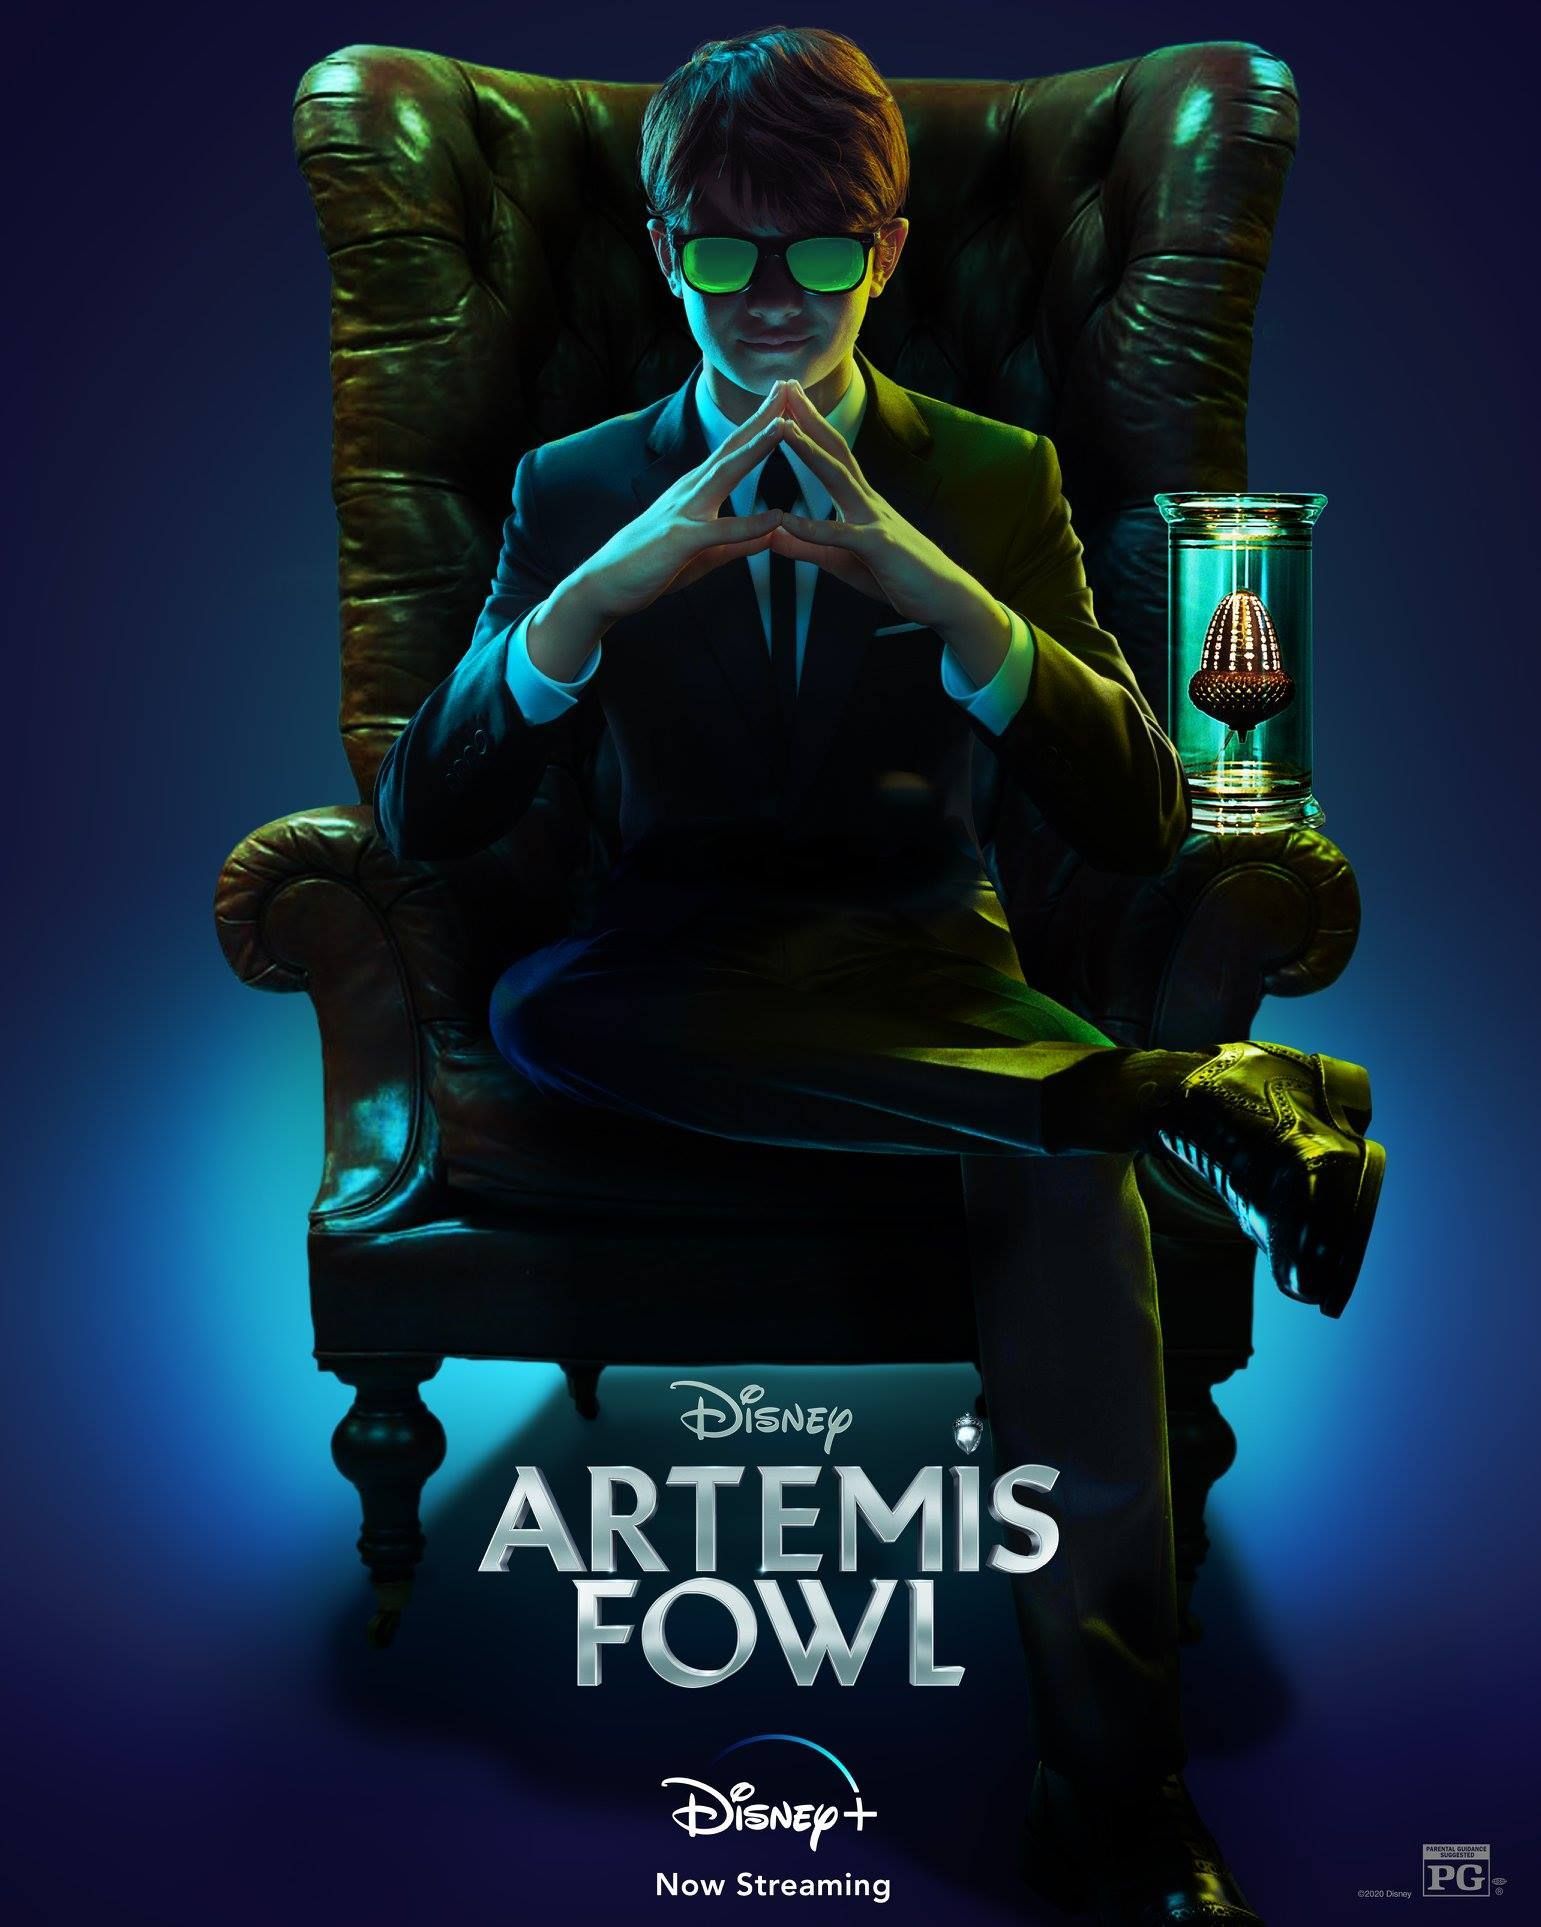 Artemis Fowl (2020) อาร์ทิมิส ฟาวล์